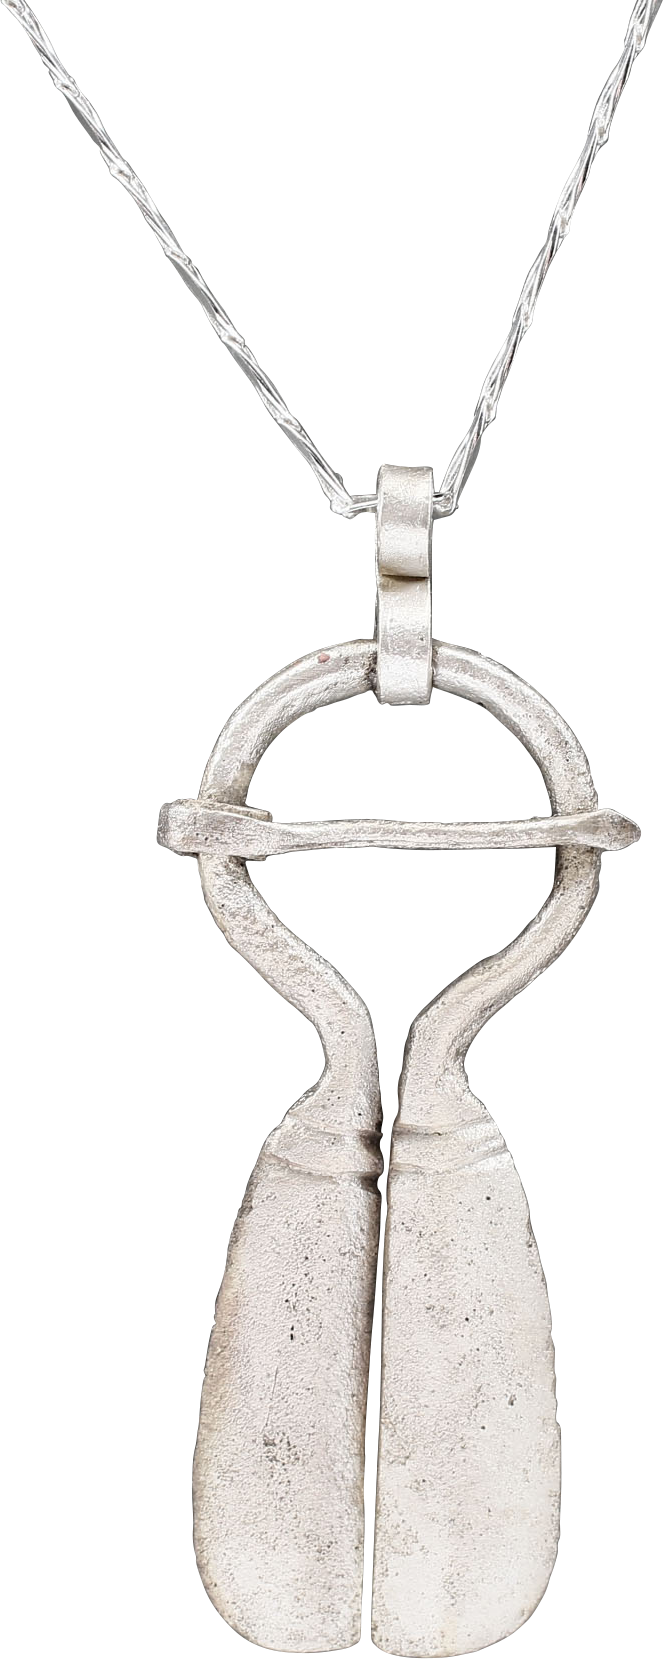 FINE VIKING PROTECTIVE BROOCH, C.950-1050 AD - Fagan Arms